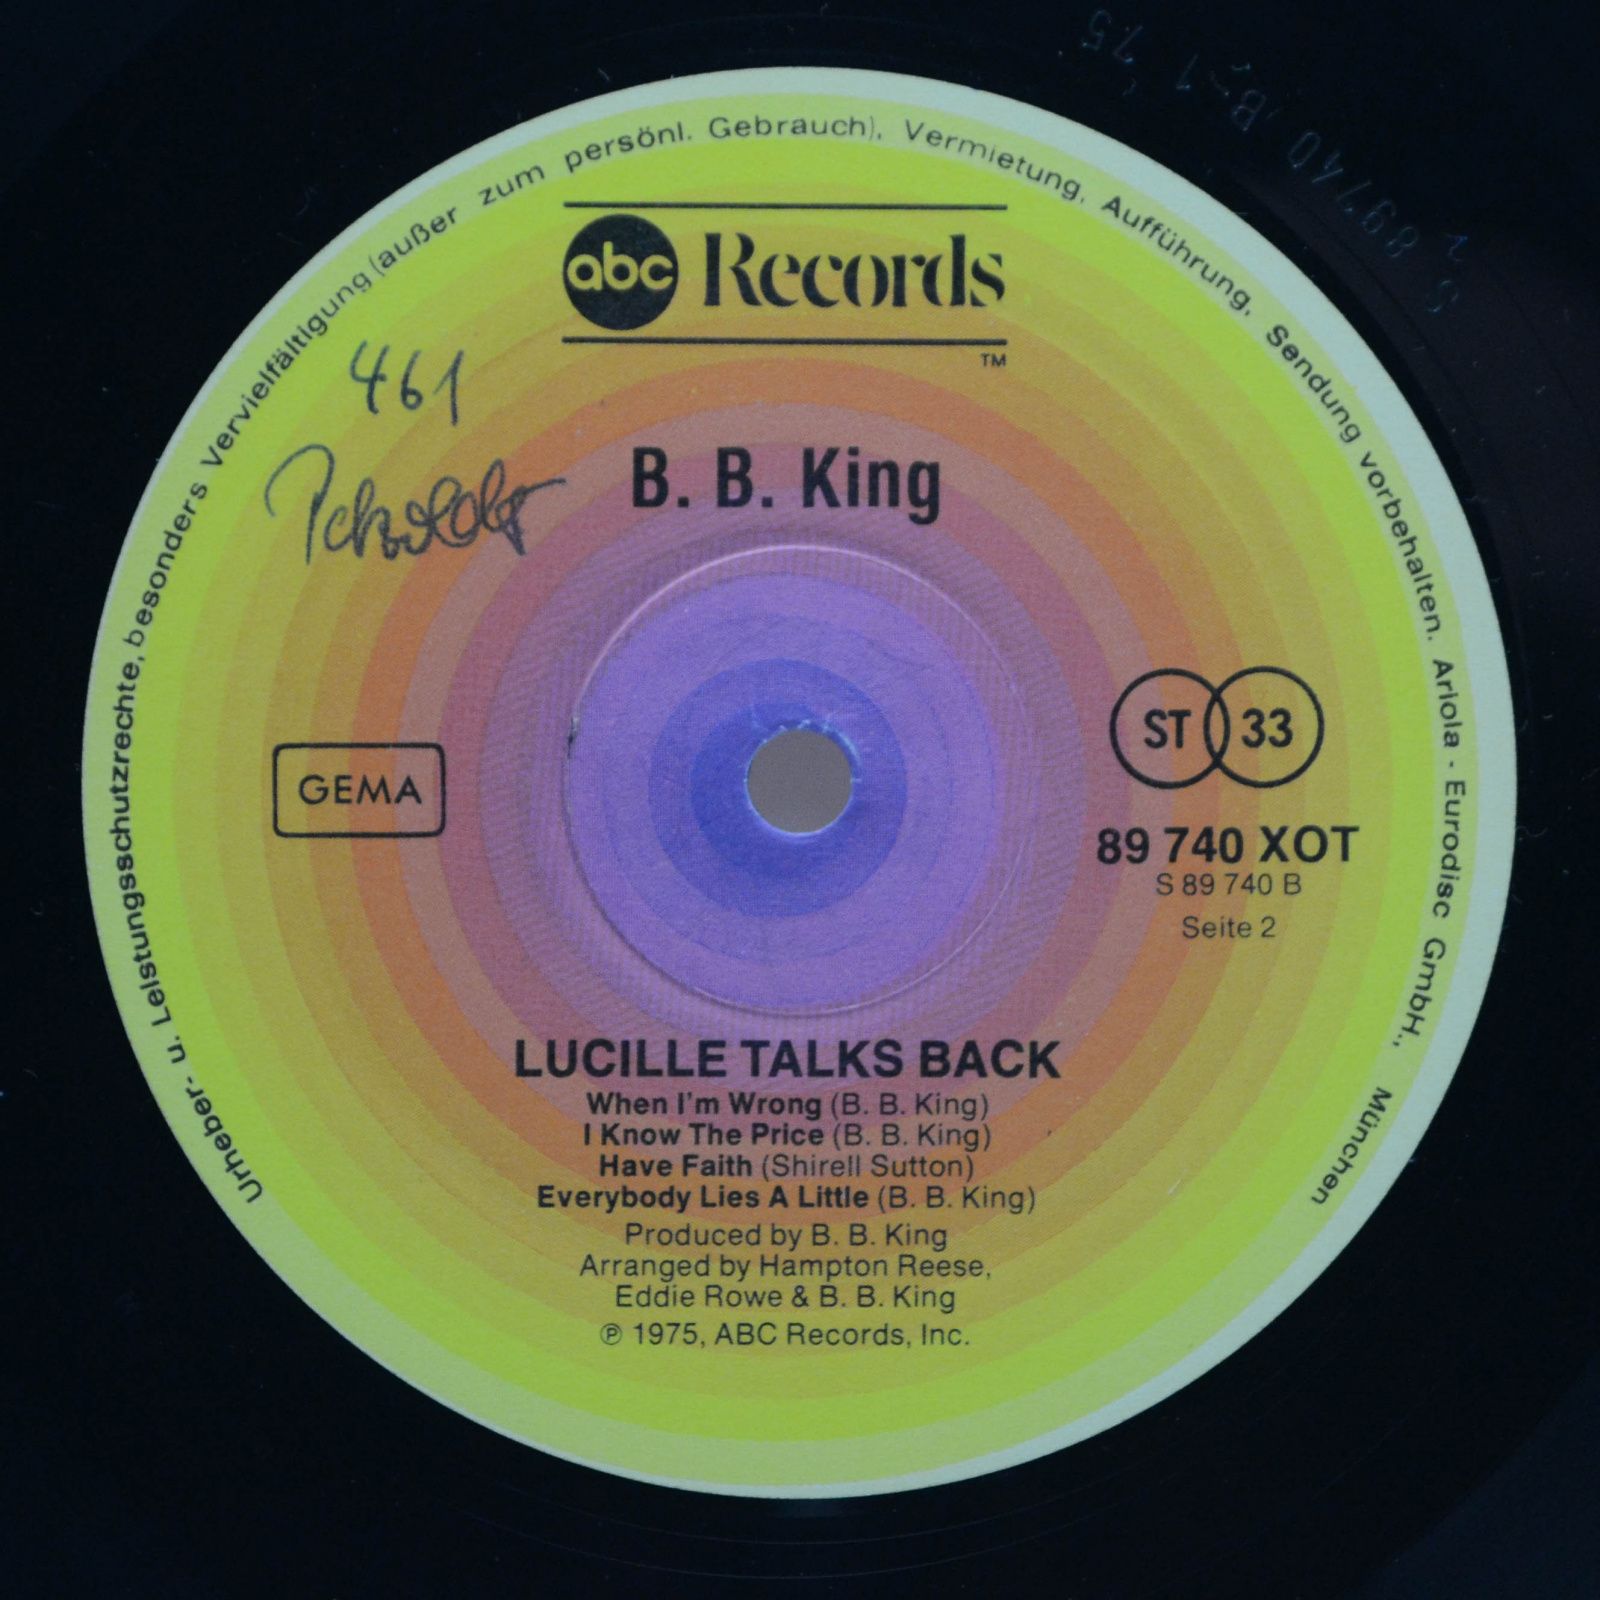 B.B. King — Lucille Talks Back, 1975